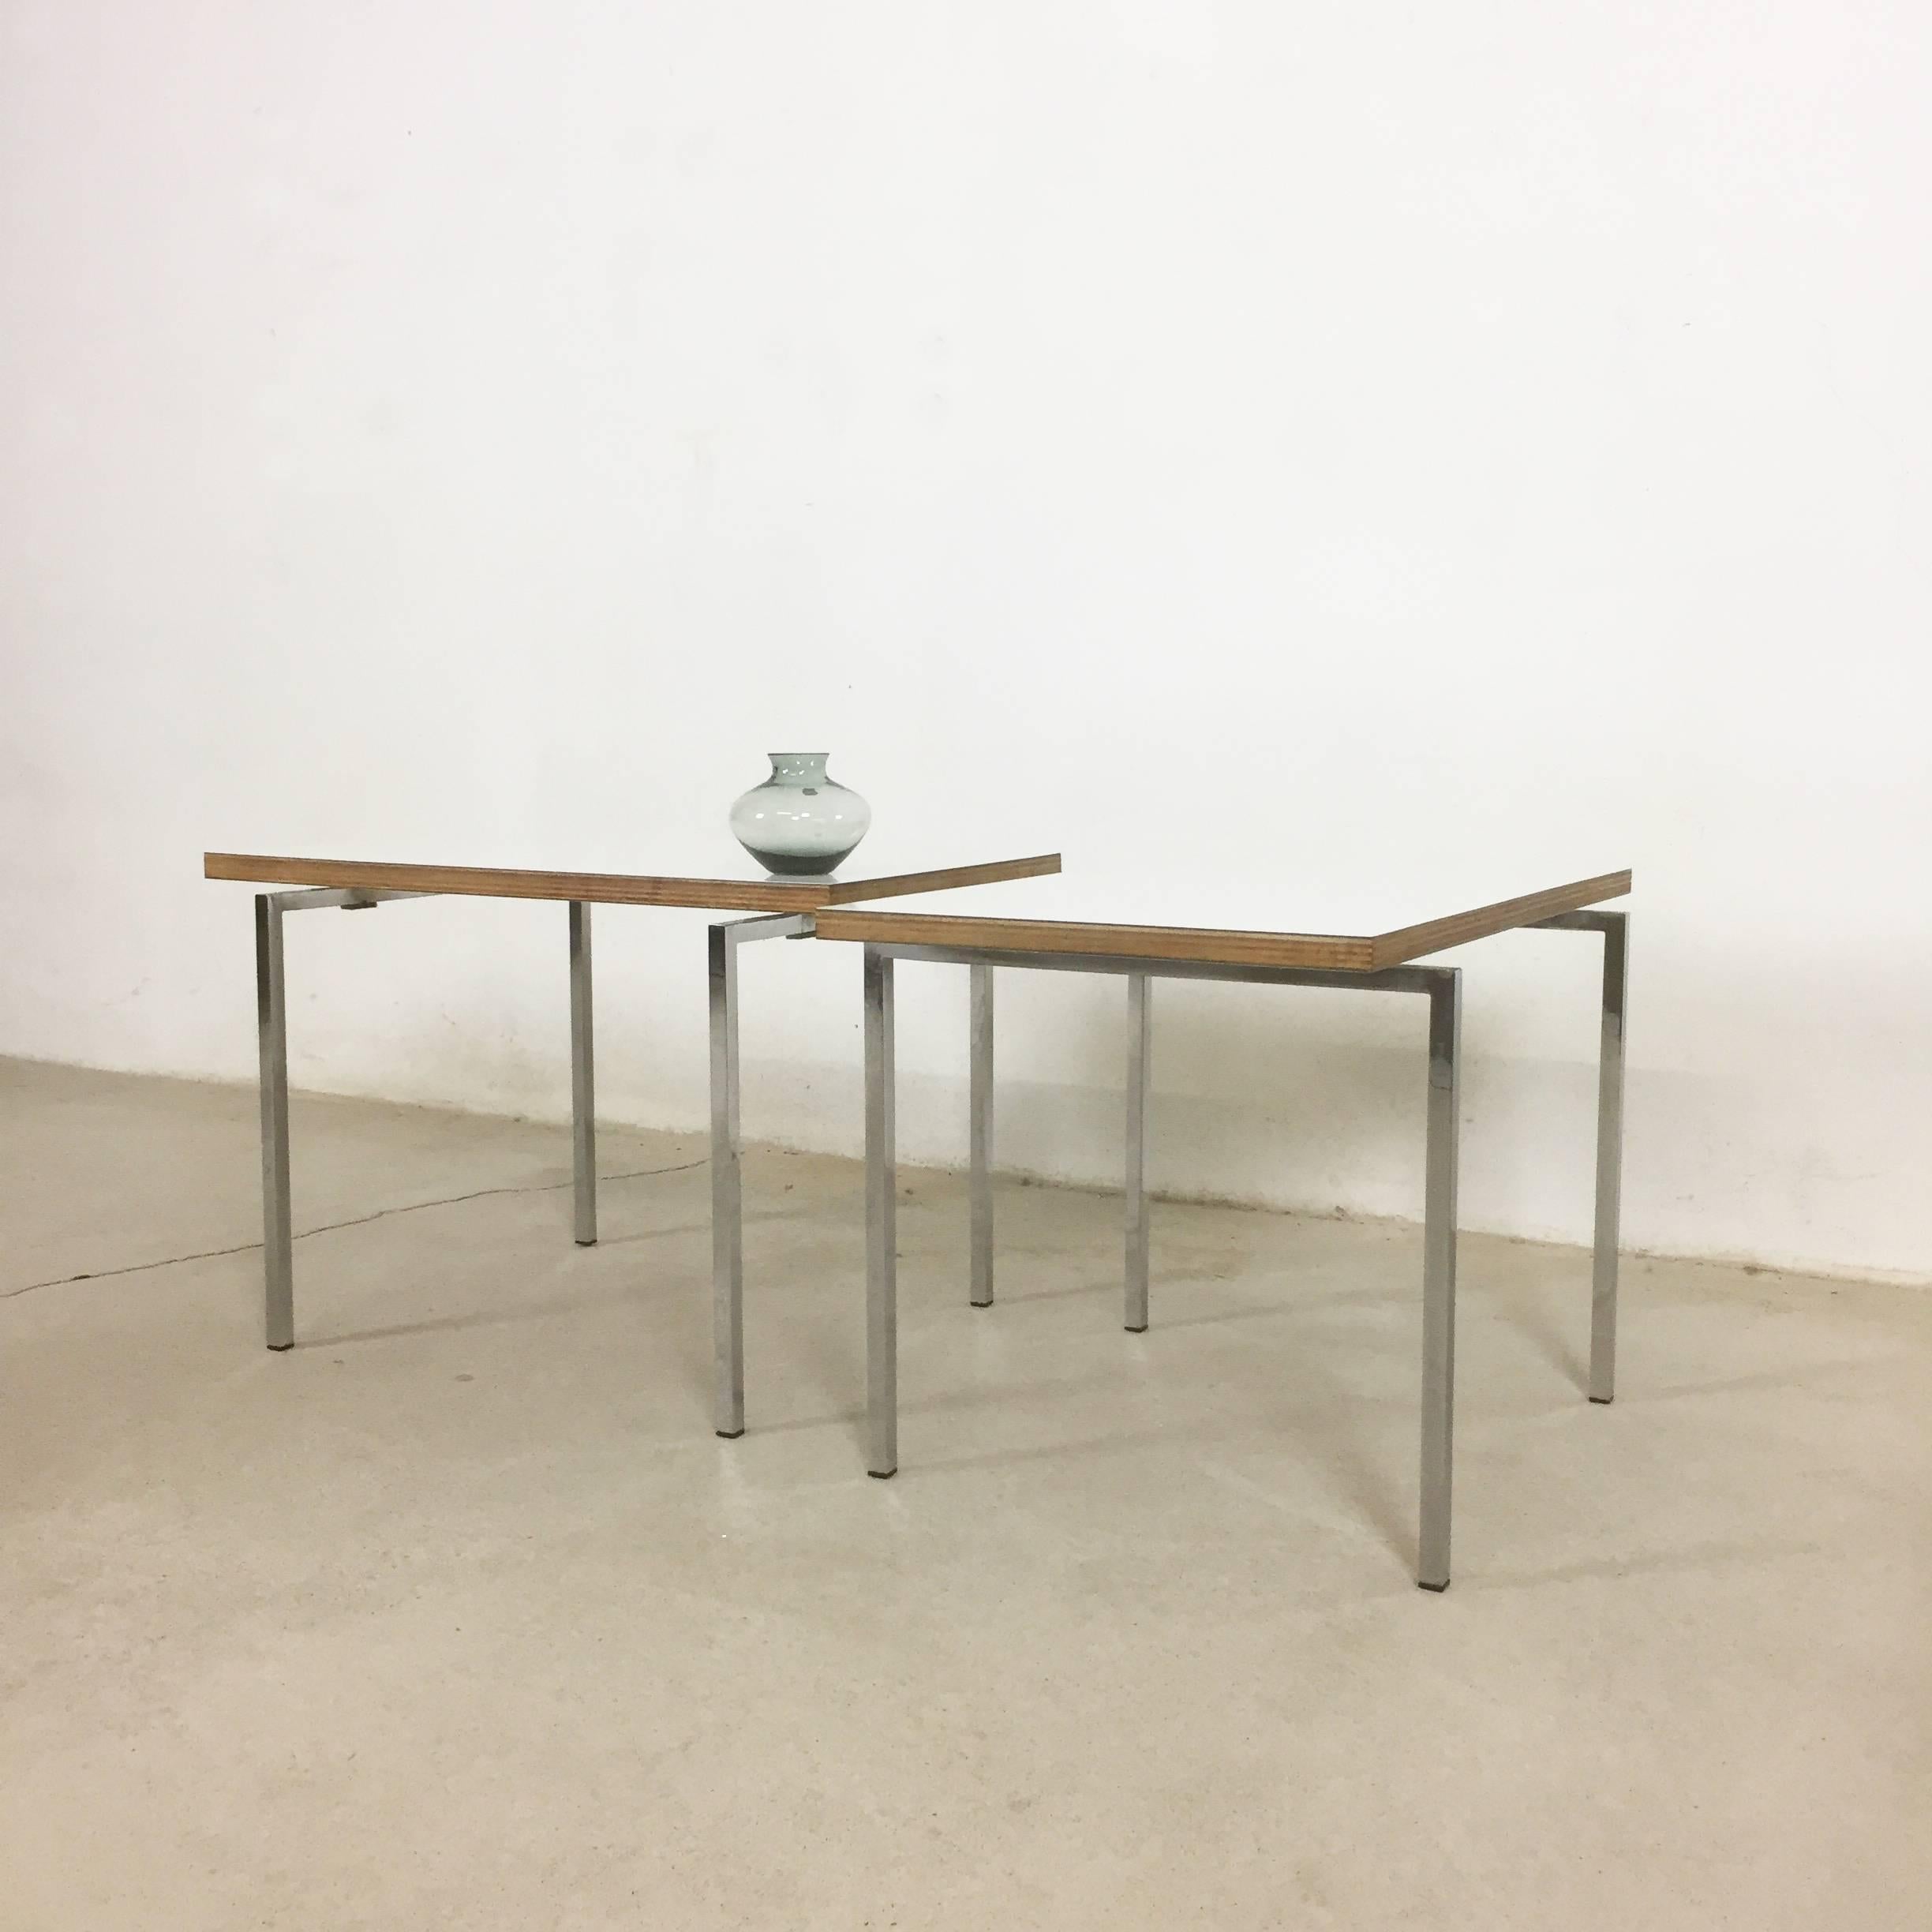 Swiss Set of Two Modernist Stacking Tables, Trix & Robert Haussmann, Switzerland, 1957 For Sale